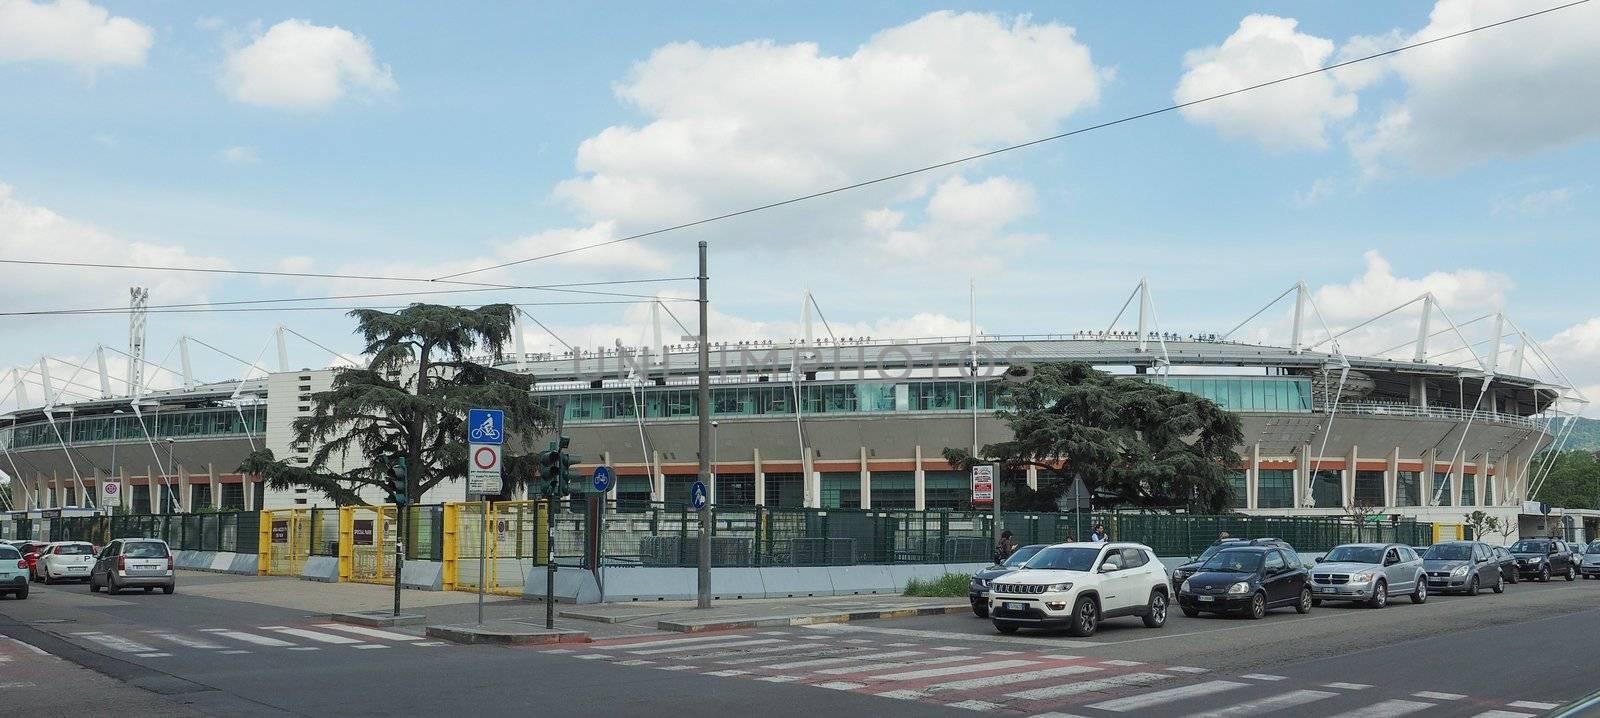 TURIN, ITALY - CIRCA MAY 2019: Stadio Comunale Olimpico aka Filadelfia stadium